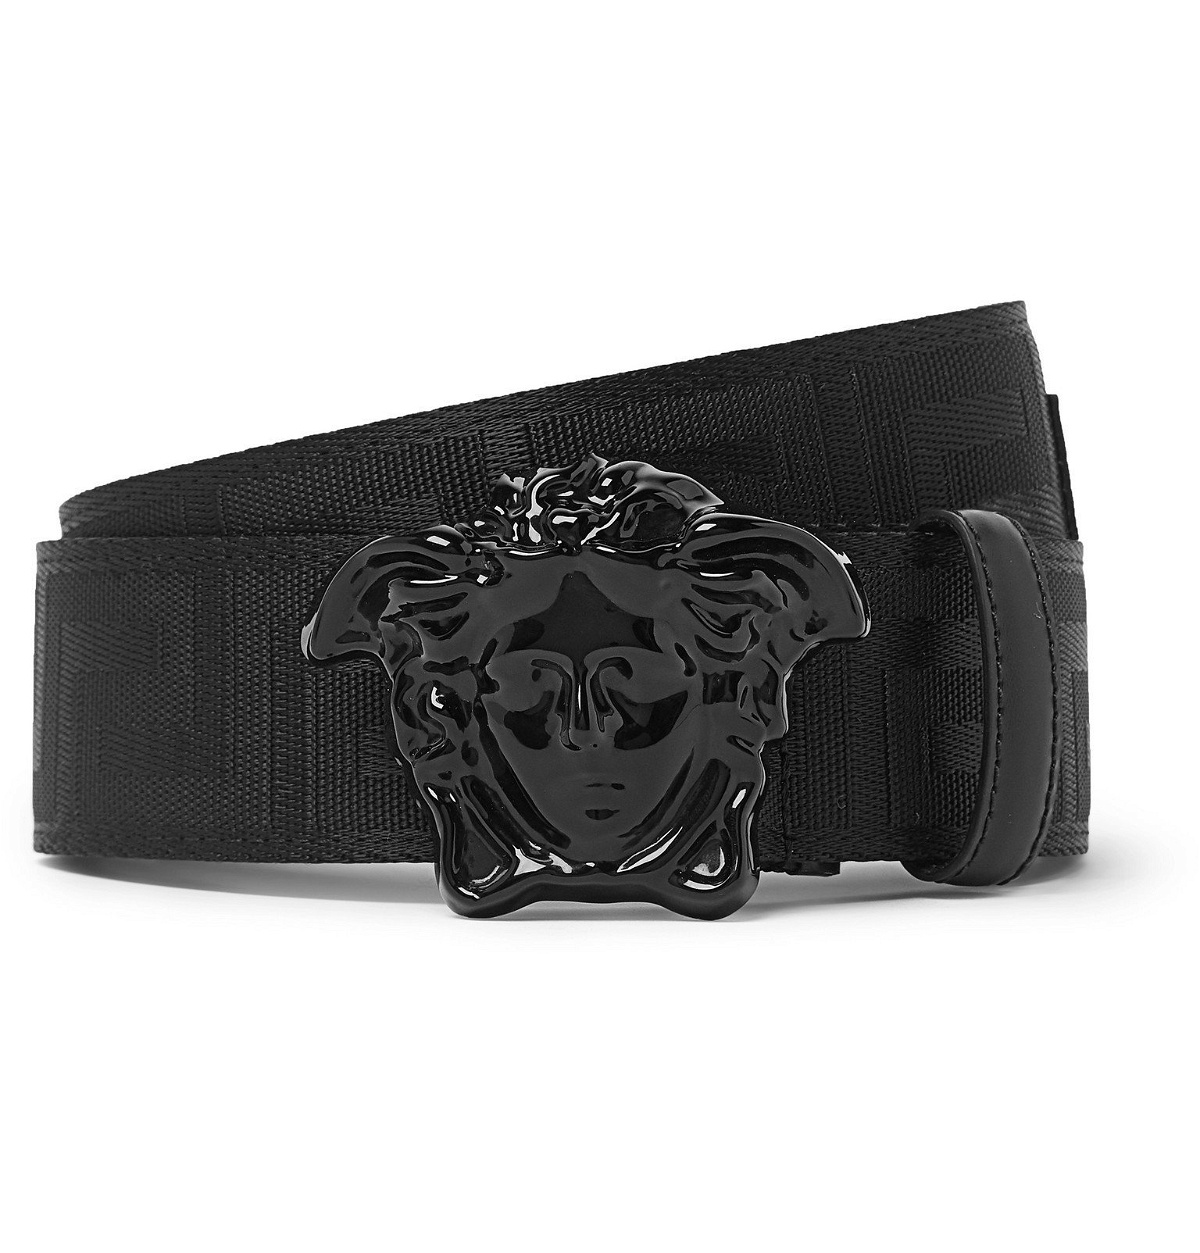 Versace - Authenticated Belt - Leather Black Plain for Men, Never Worn